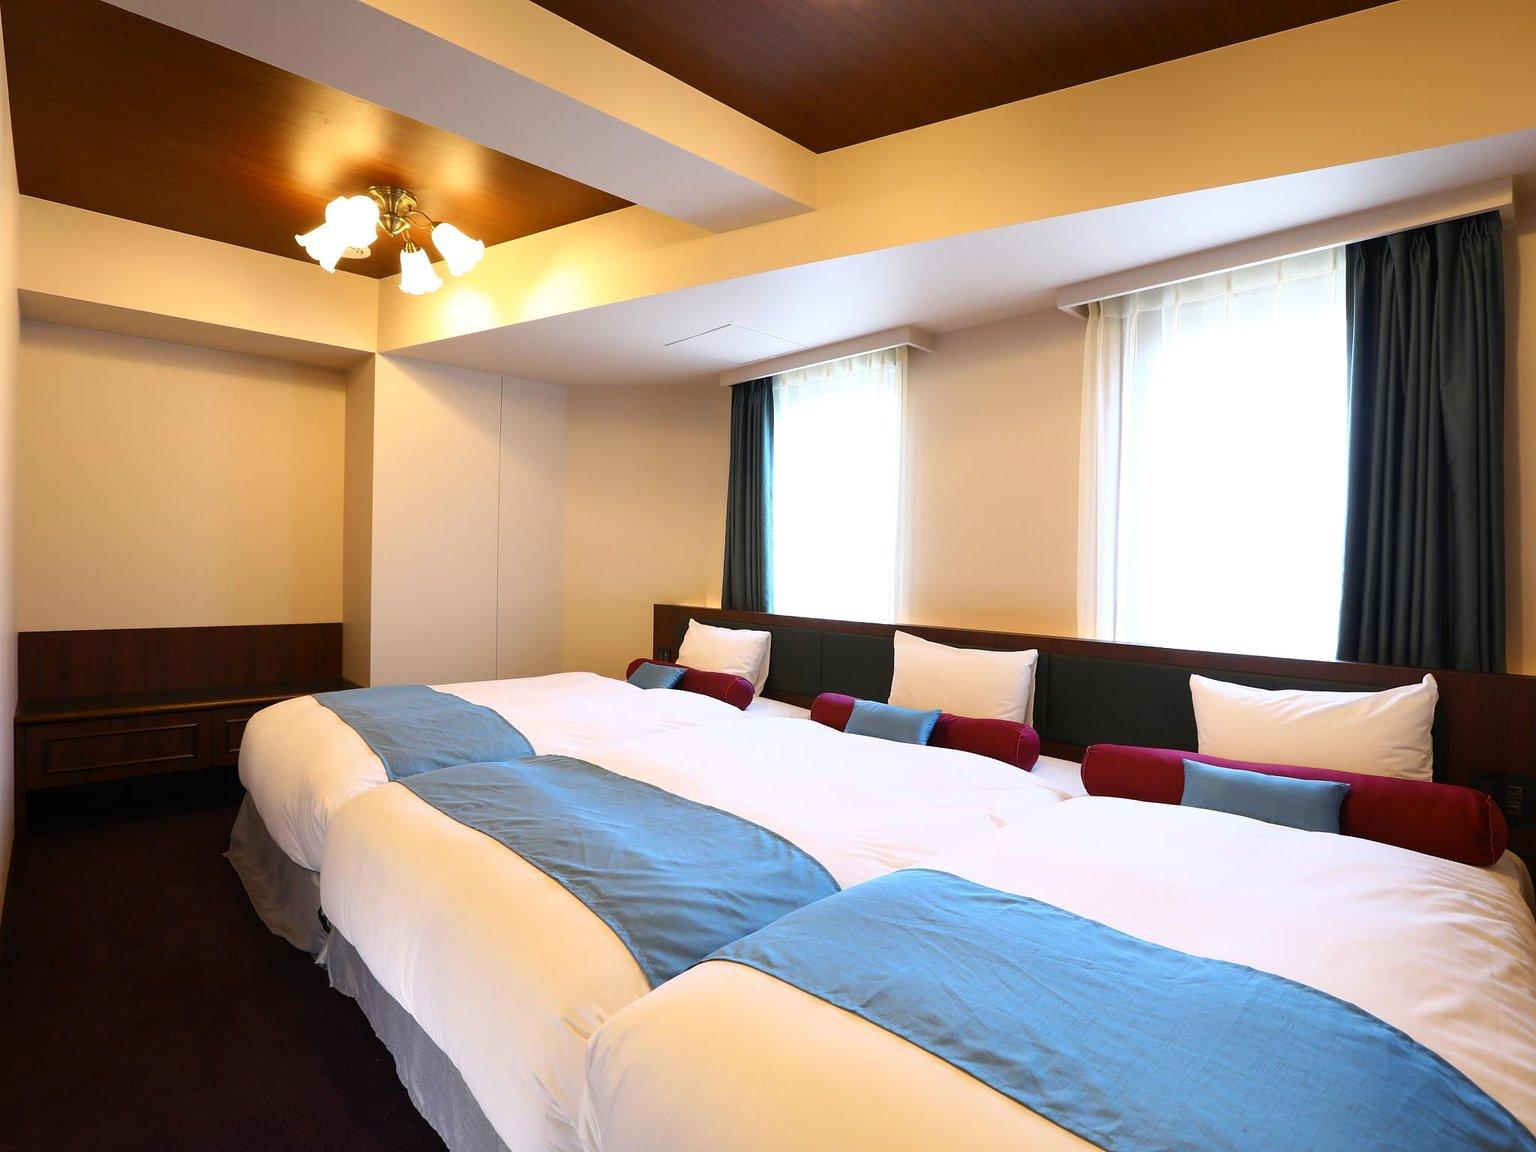 Triple Room Non-Smoking - 호텔 윙 인터내셔널 셀렉트 이케부쿠로 / Hotel Wing International Select Ikebukuro